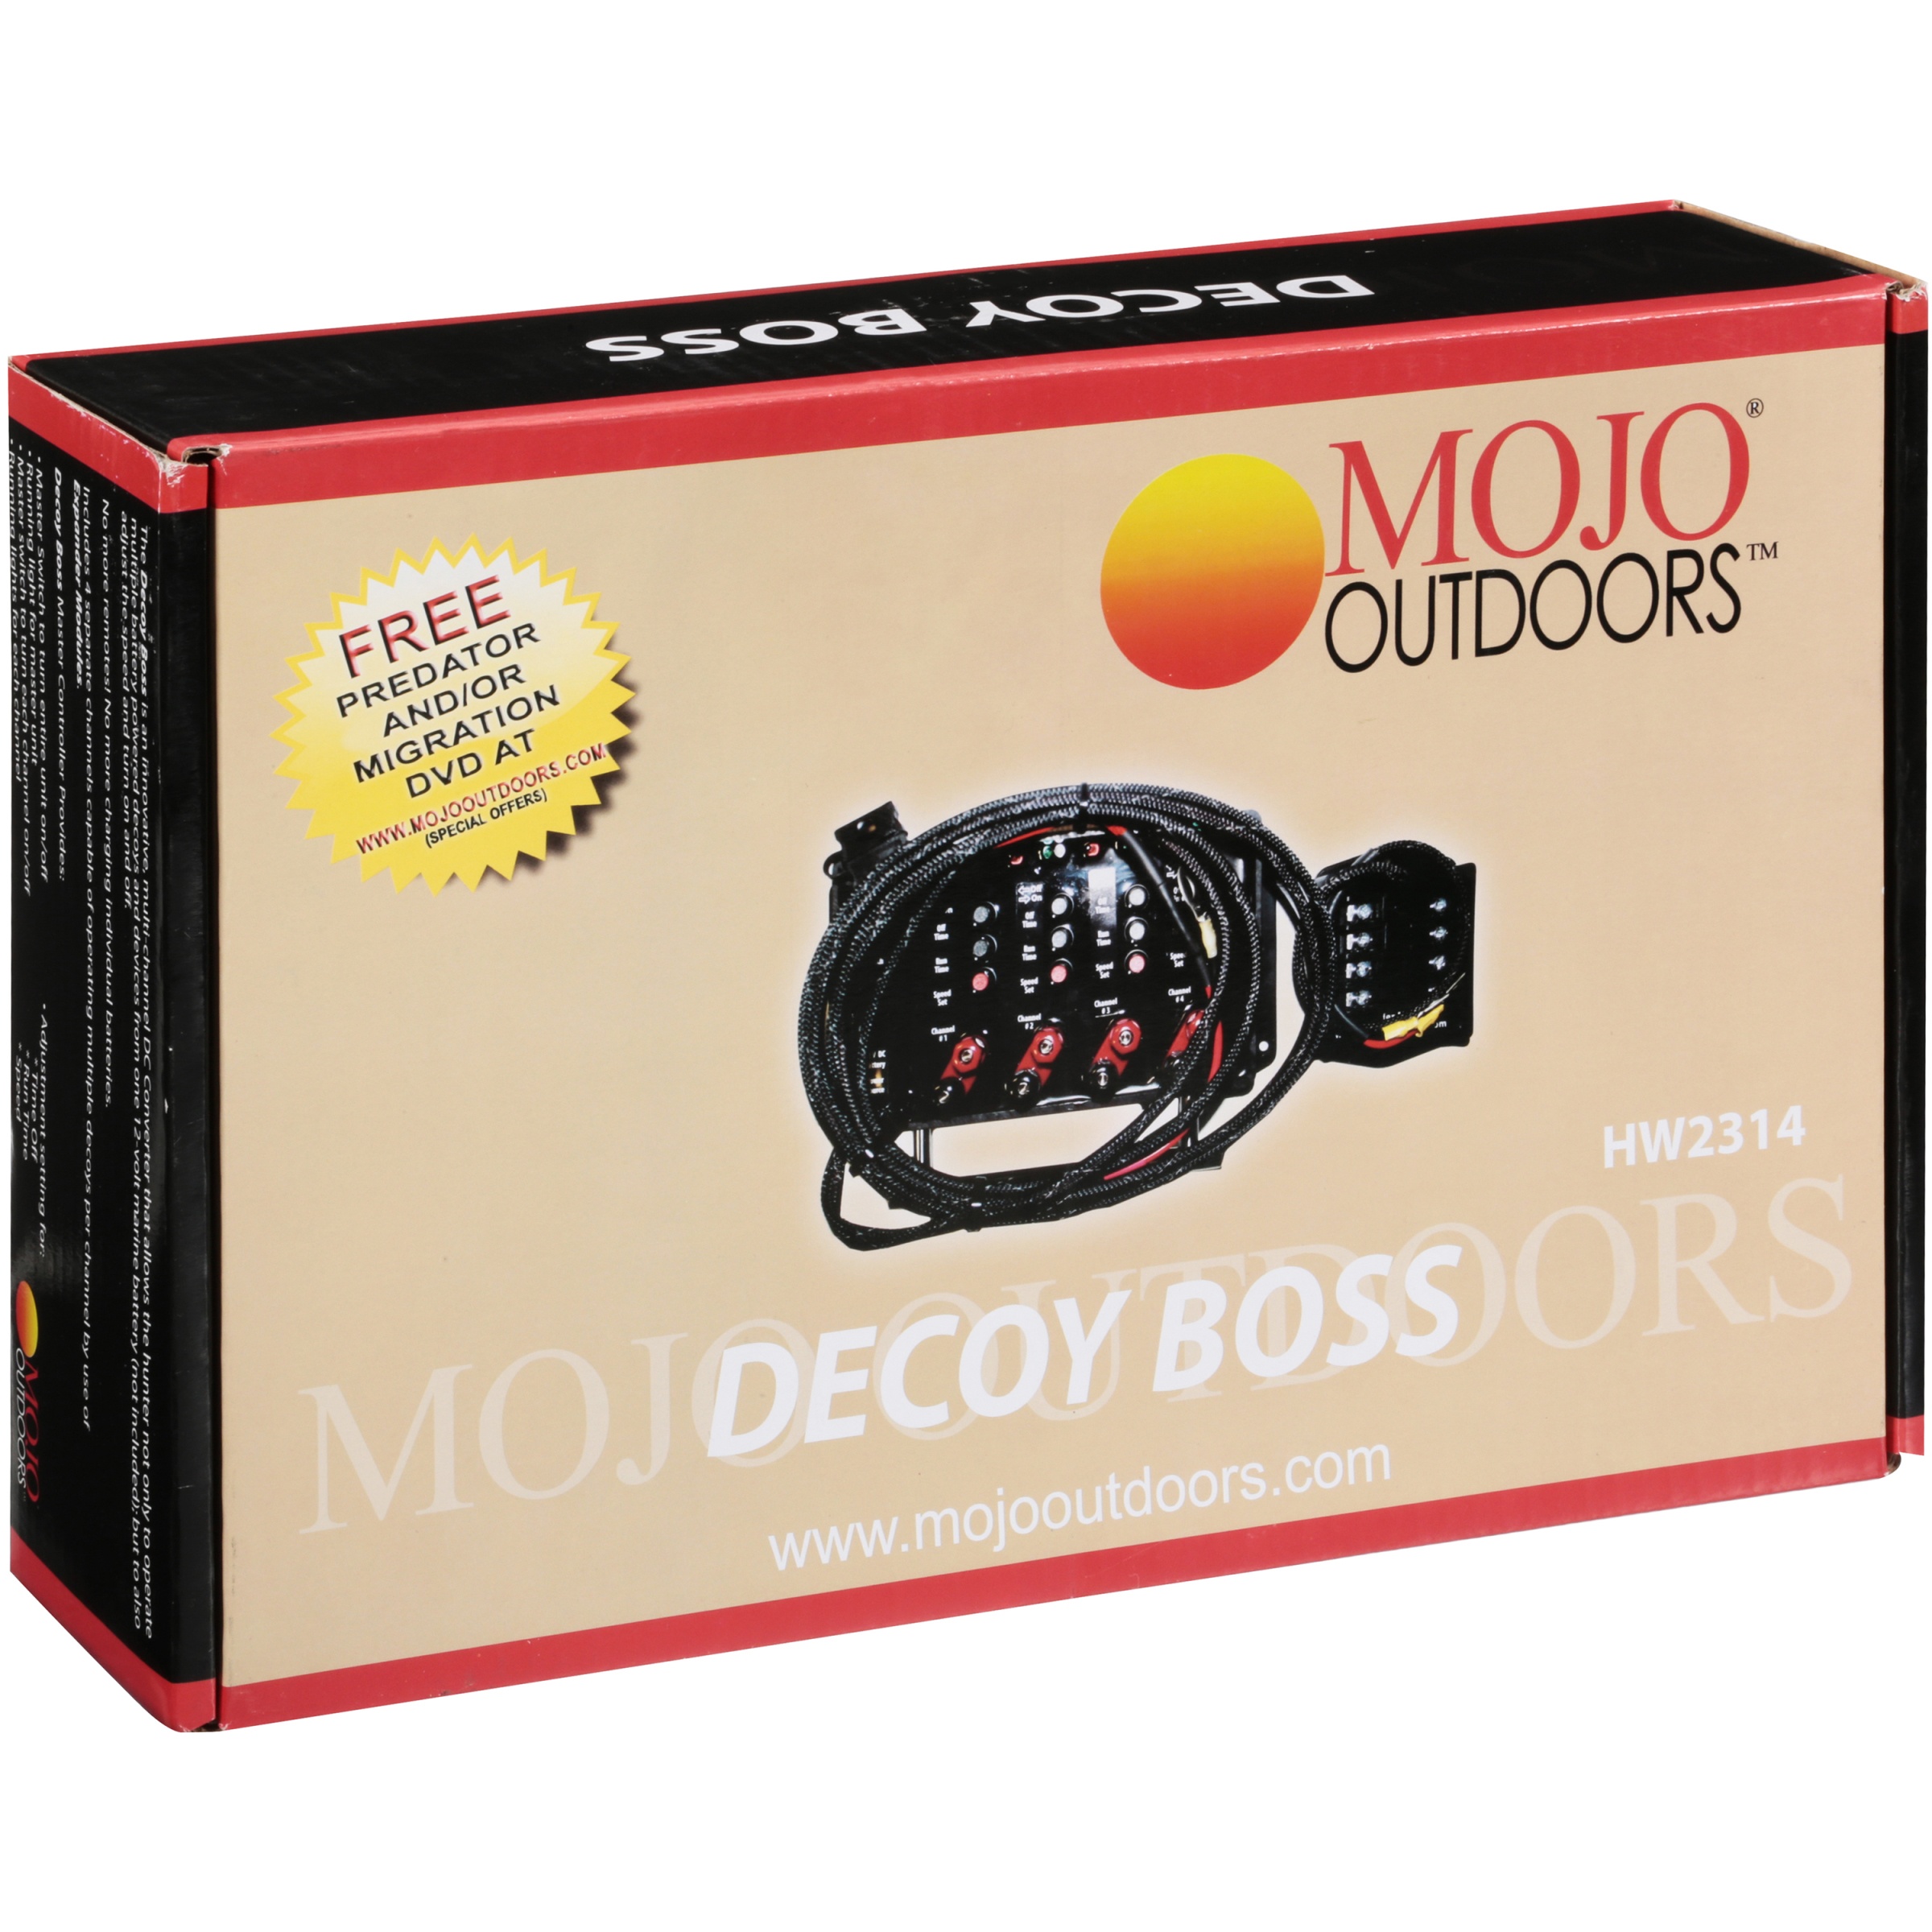 Mojo® Outdoors™ Decoy Boss Multi-Channel DC Converter 6 pc Box - image 2 of 4